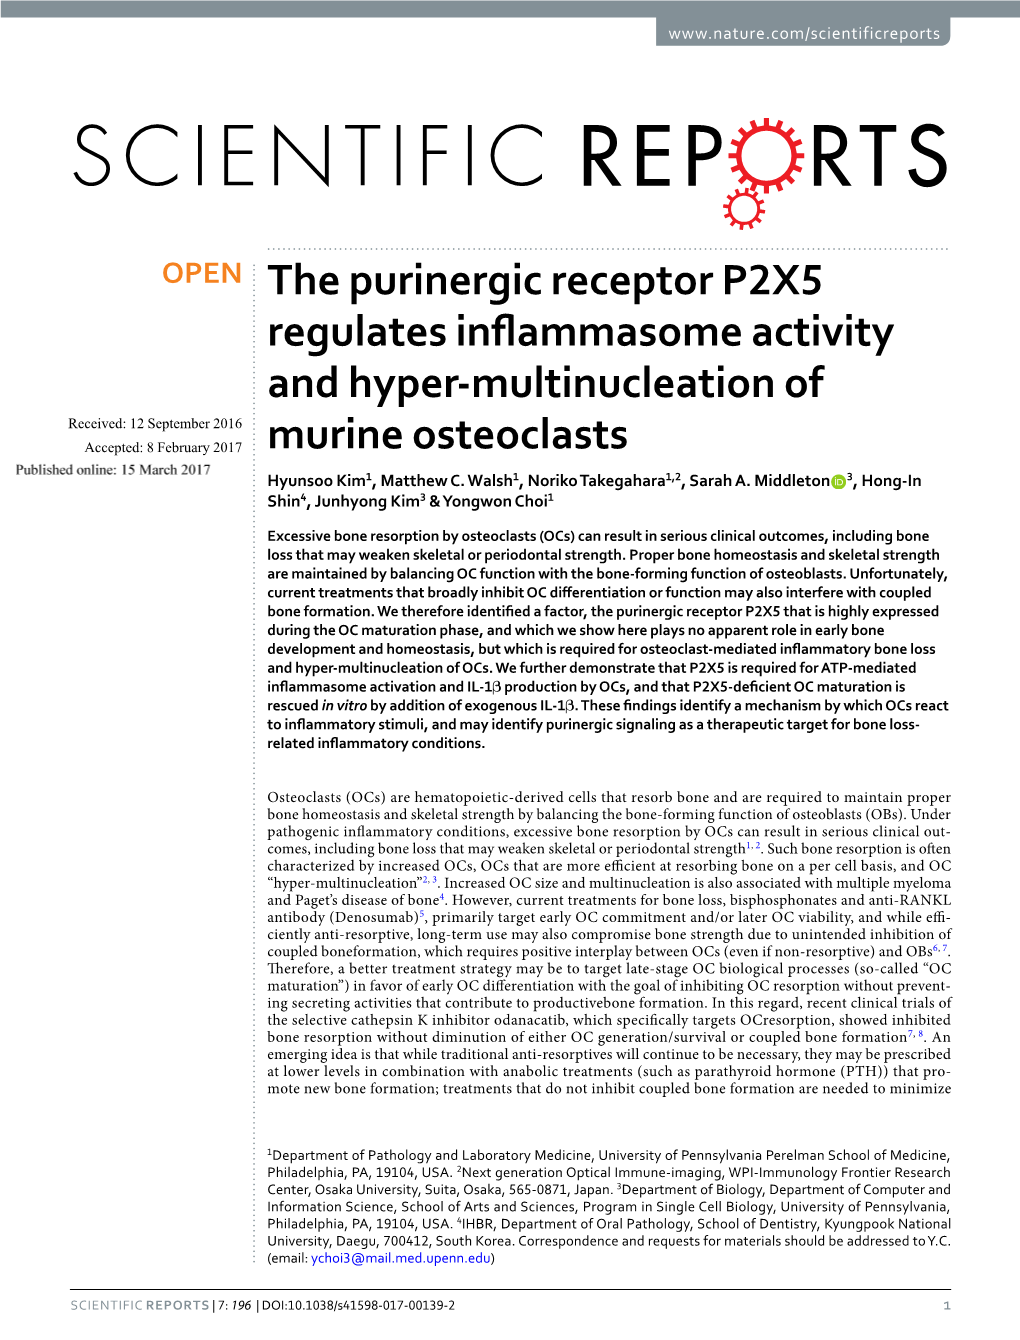 The Purinergic Receptor P2X5 Regulates Inflammasome Activity